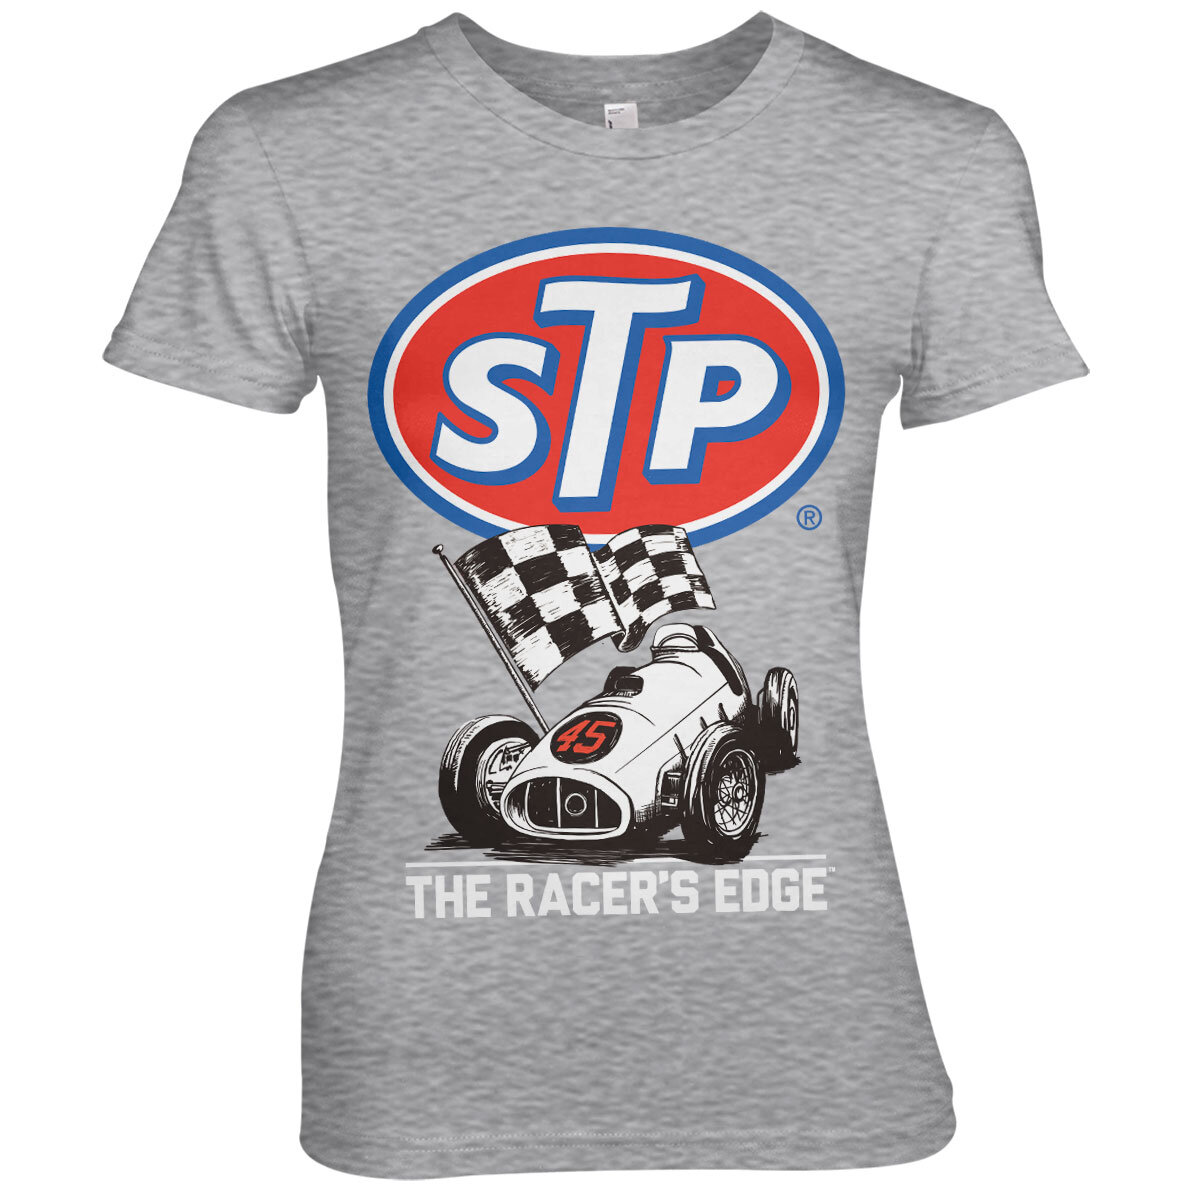 STP Retro Racer Girly Tee